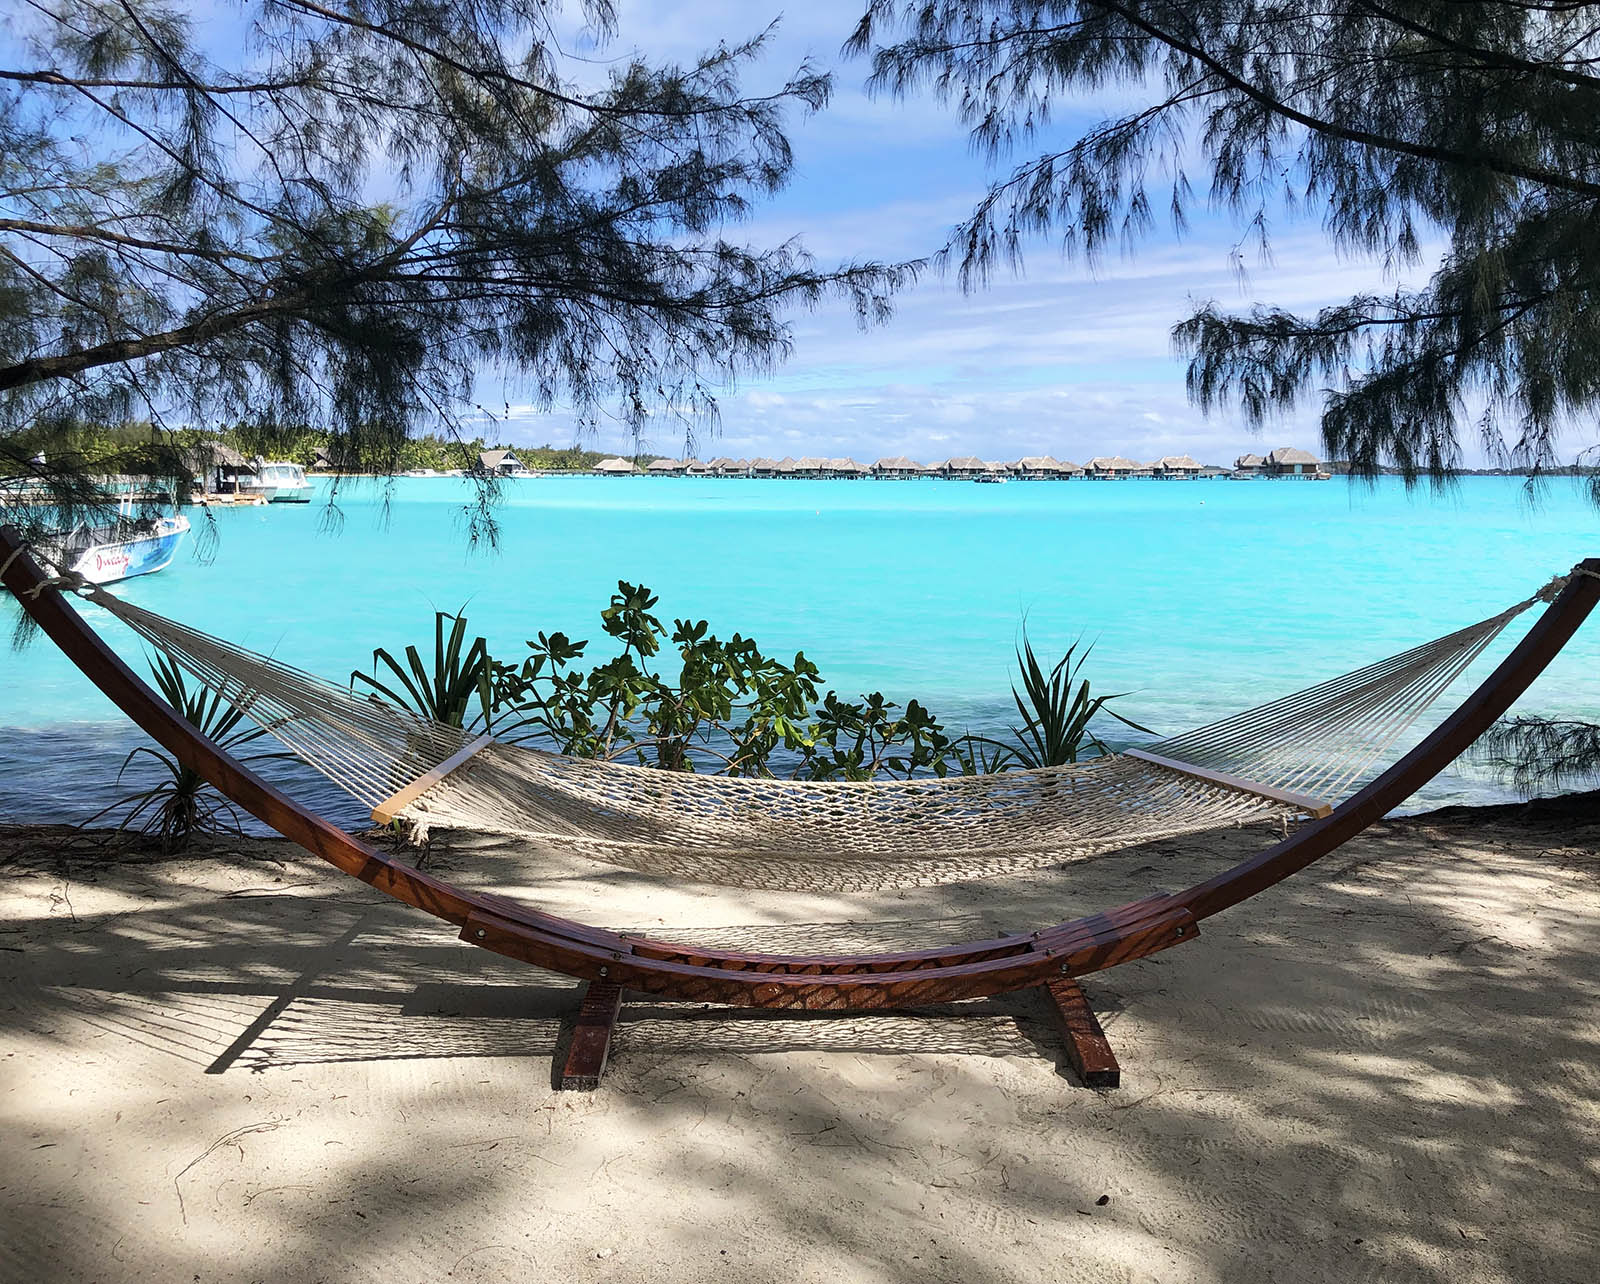 Relaxing time at Le Méridien Bora Bora. Credit: Christian Bergara